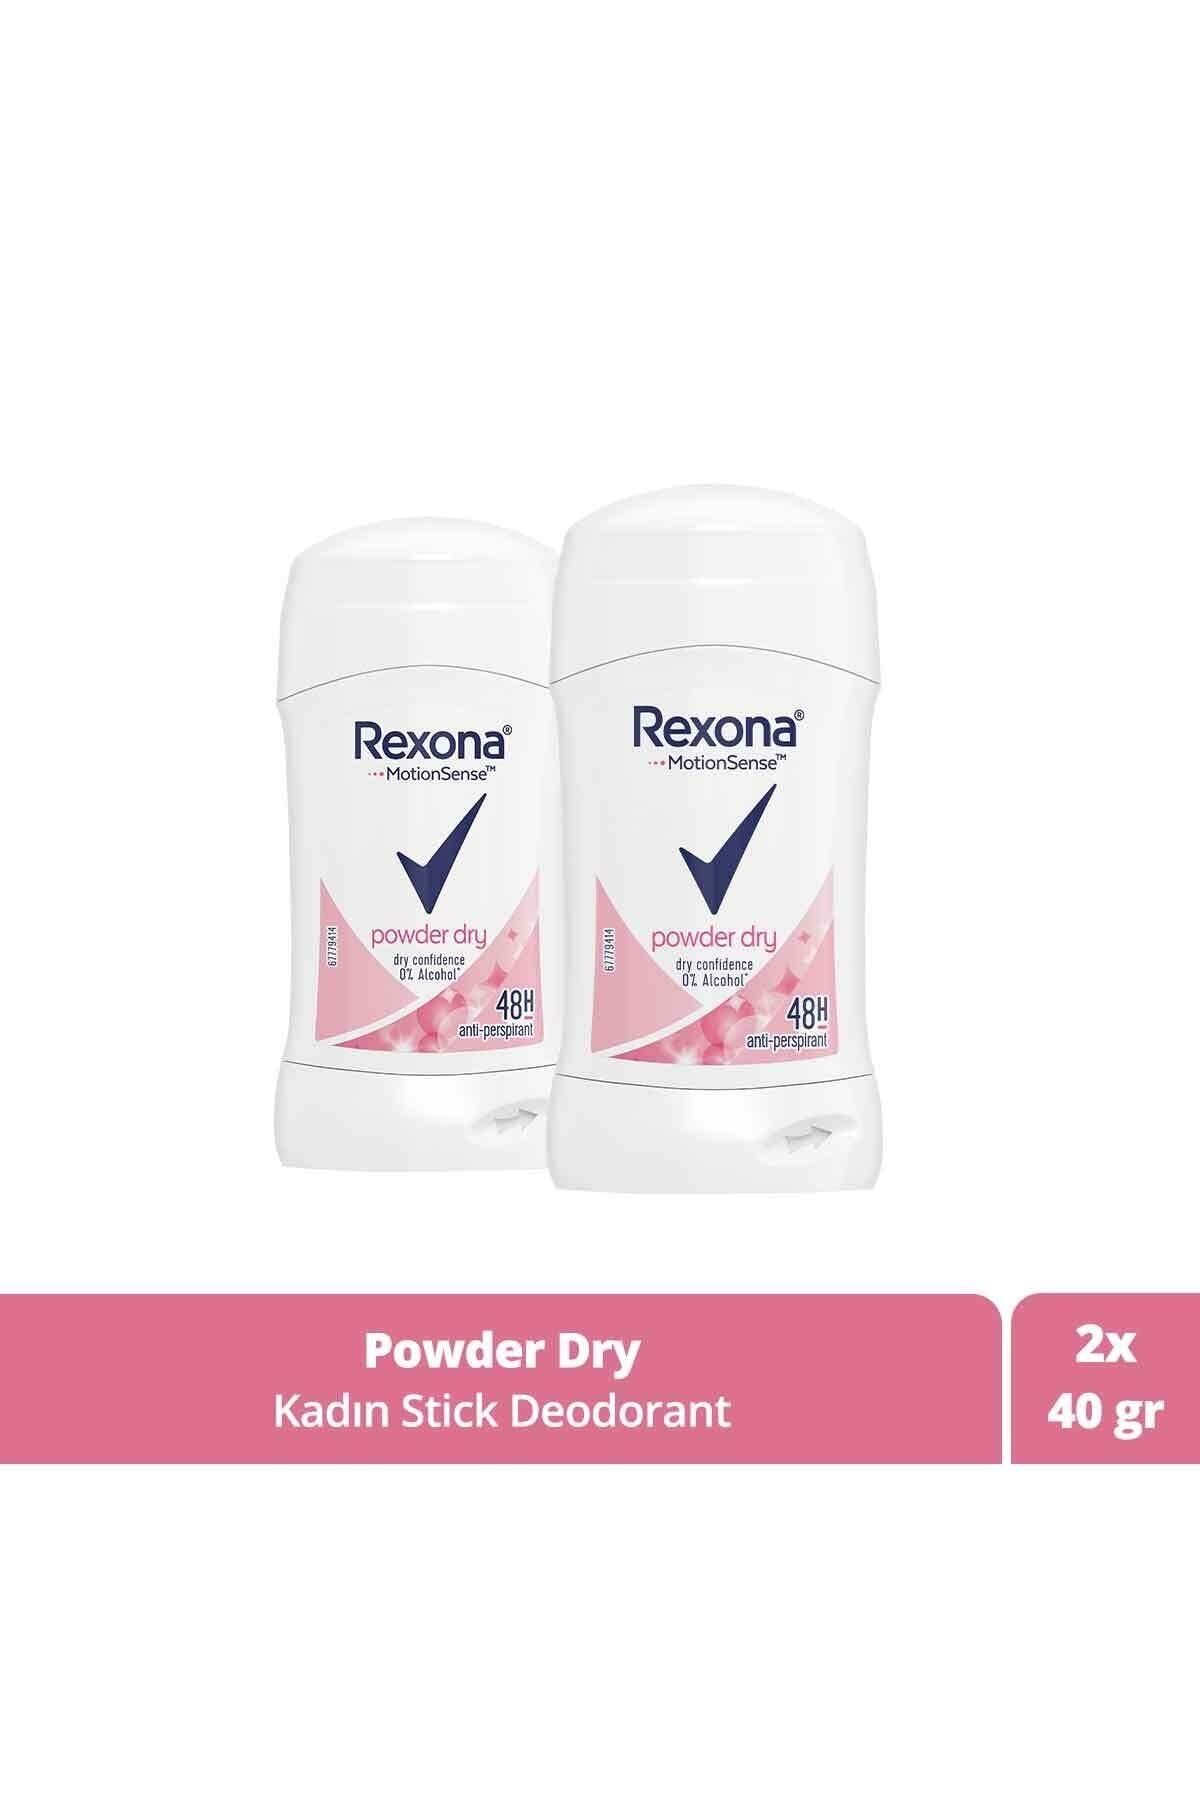 Rexona Motion Sense Kadın Stick Deodorant Powder Dry 48 Saat Koruma 40 g x 2 Adet